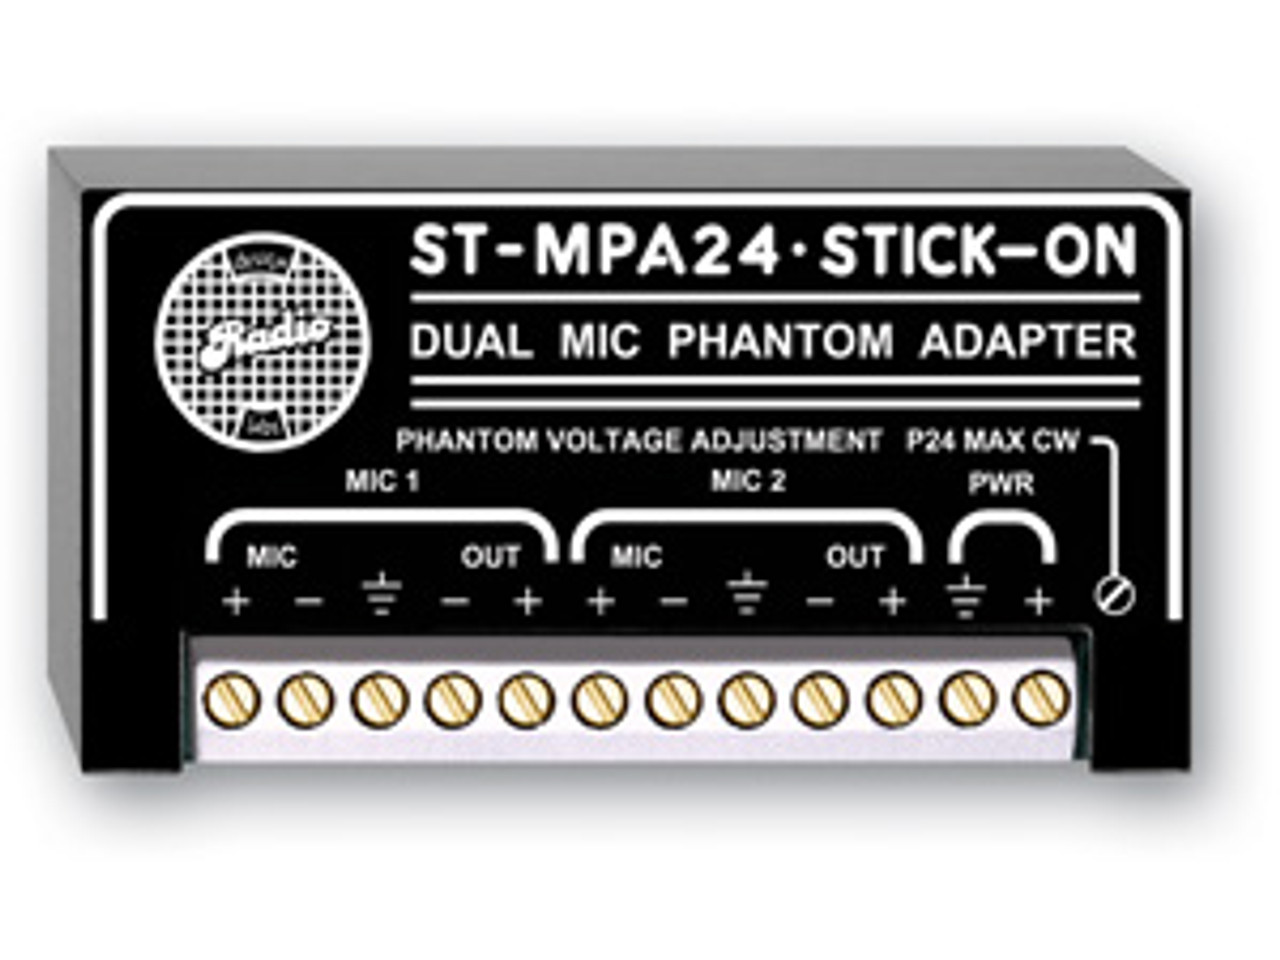 RDL ST-MPA24 Dual Microphone Phantom Adapter - 24 V Adjustable (ST-MPA24)